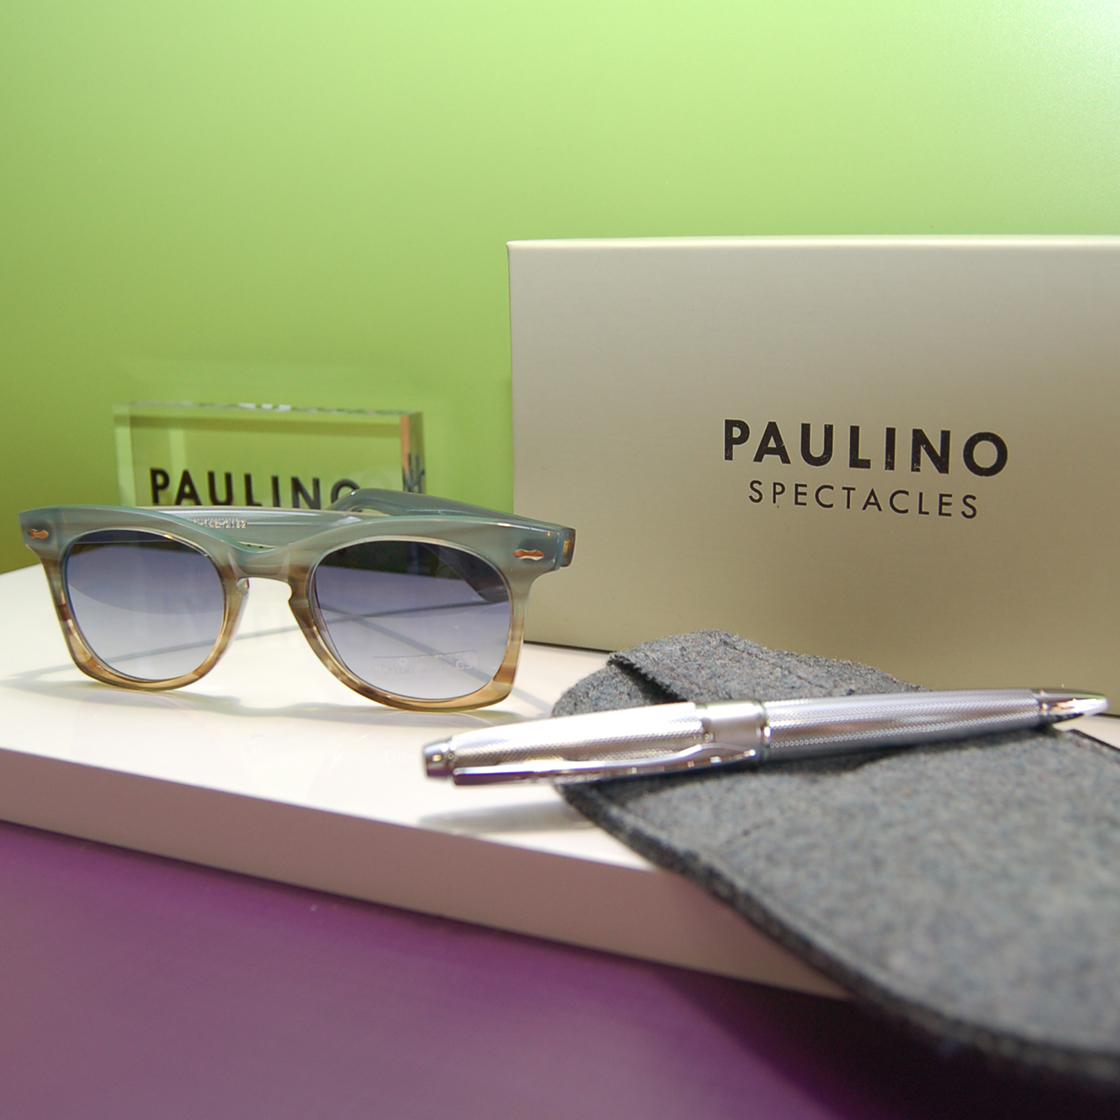 Paulino Spectacles